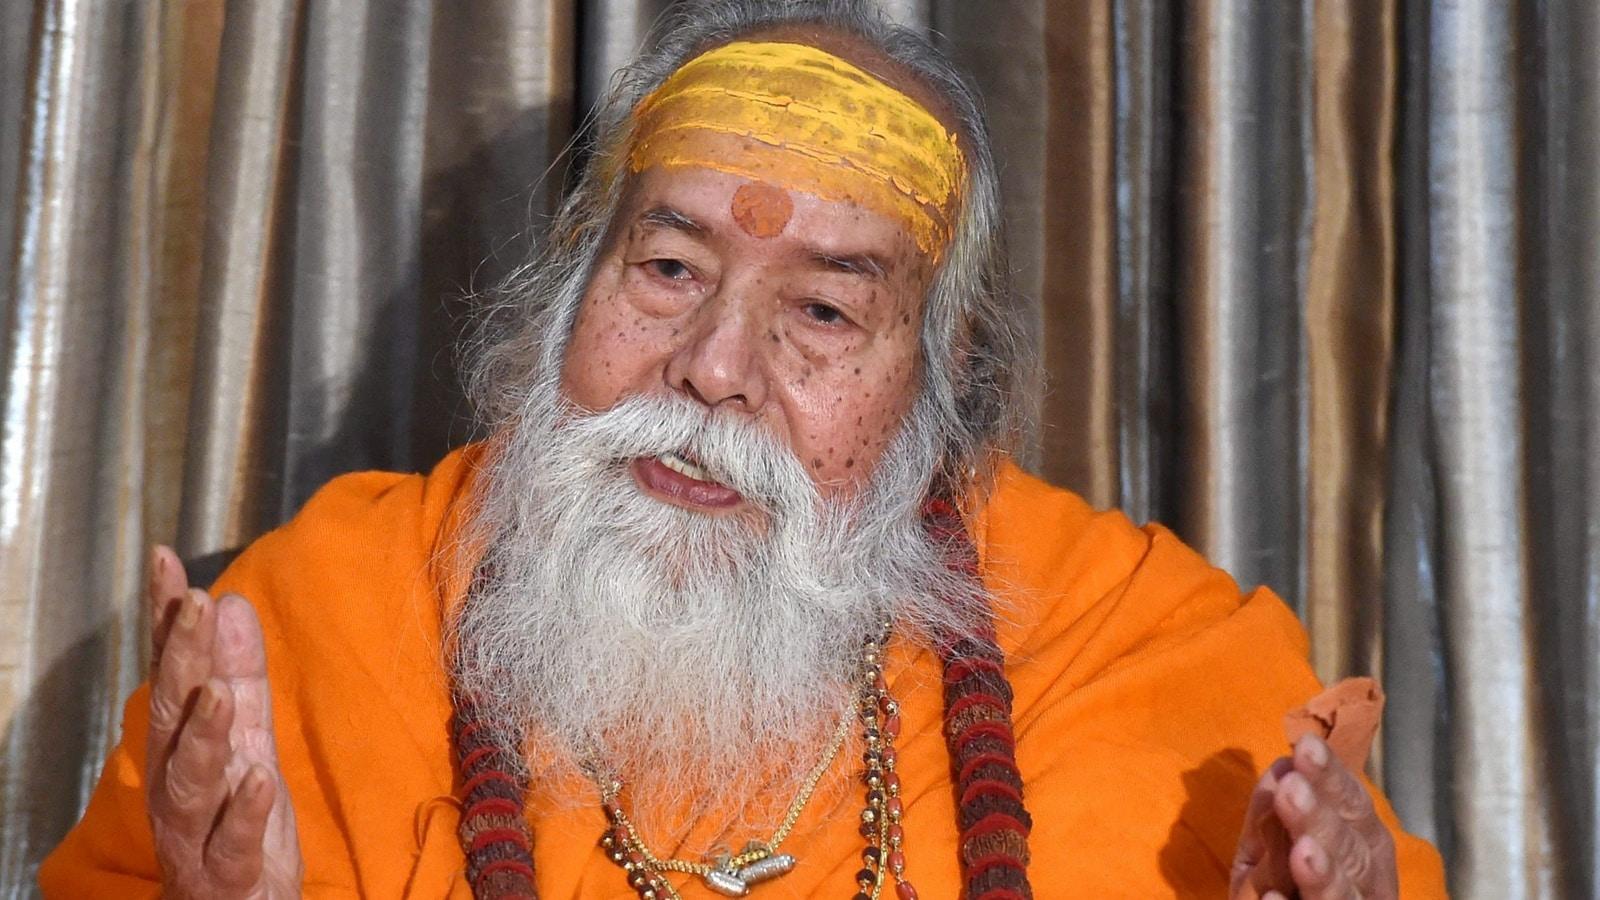 Swami Swaroopanand Saraswati passes away at 99_50.1